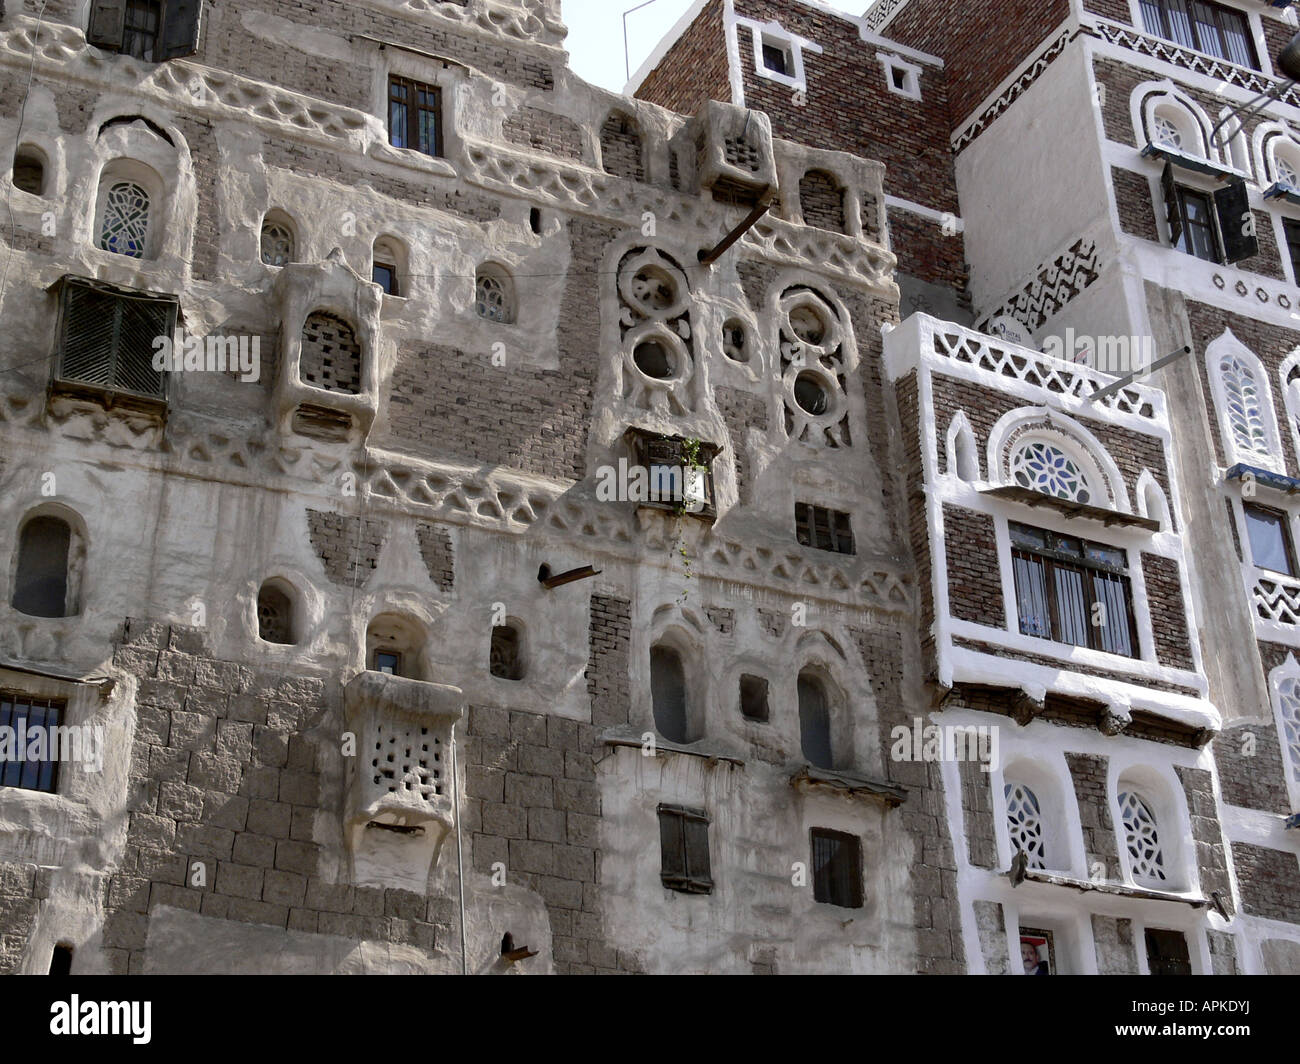 claddings in old town, Yemen, Sanaa Stock Photo